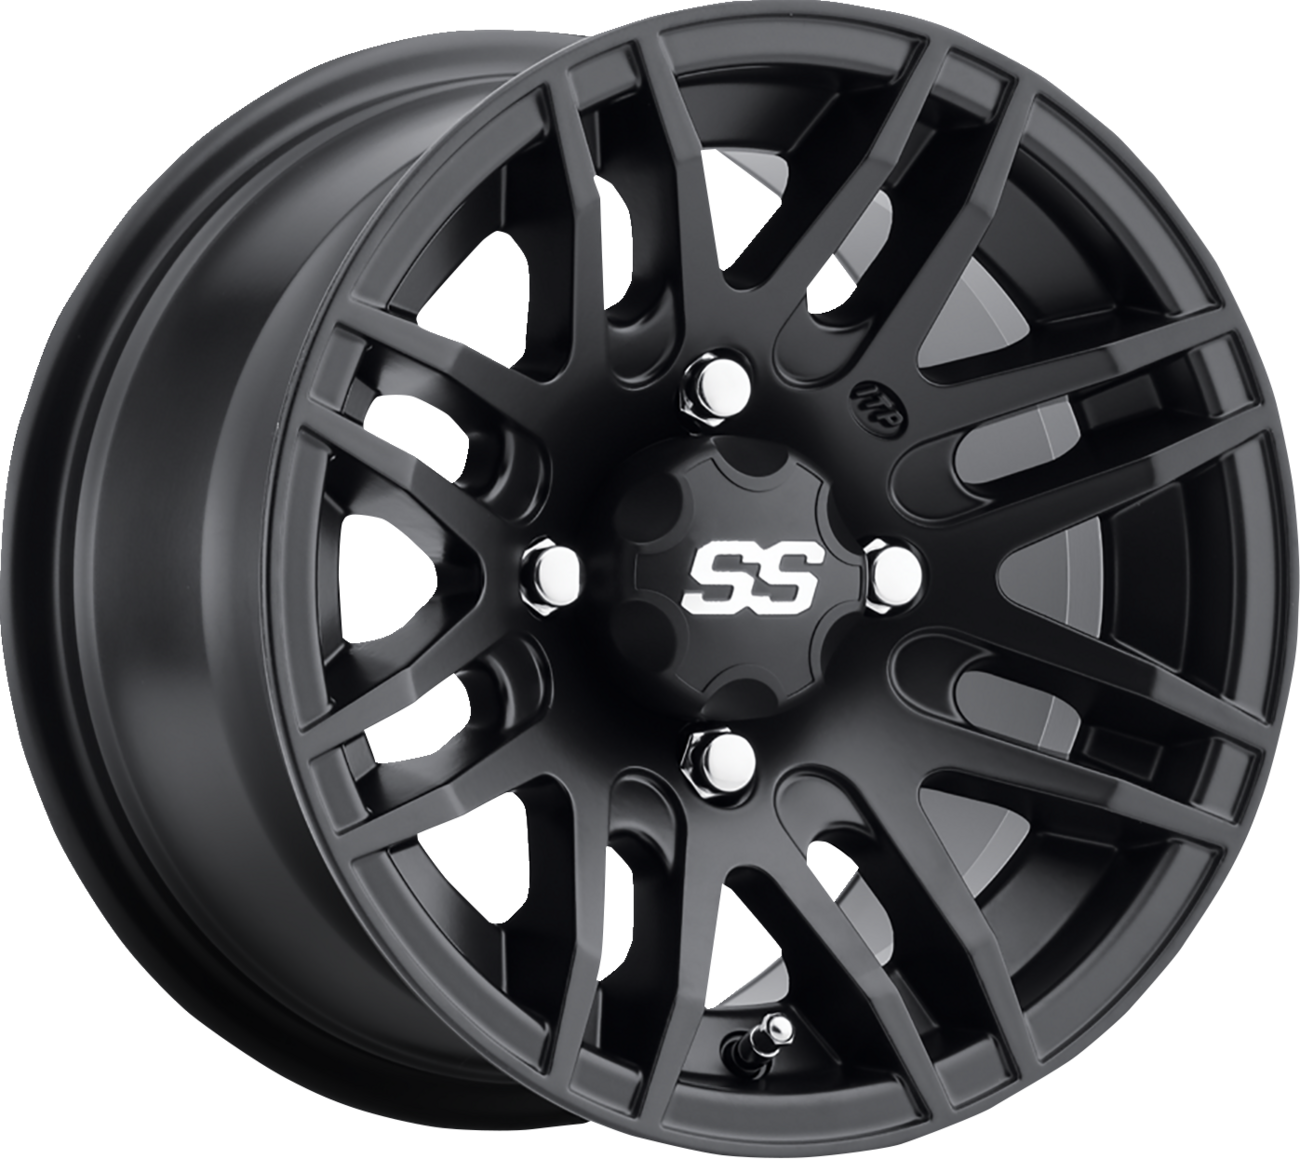 ITP SS316 Alloy Wheel - Rear - Machined Black - 14x7 - 4/110 - 2+5 1428561536B